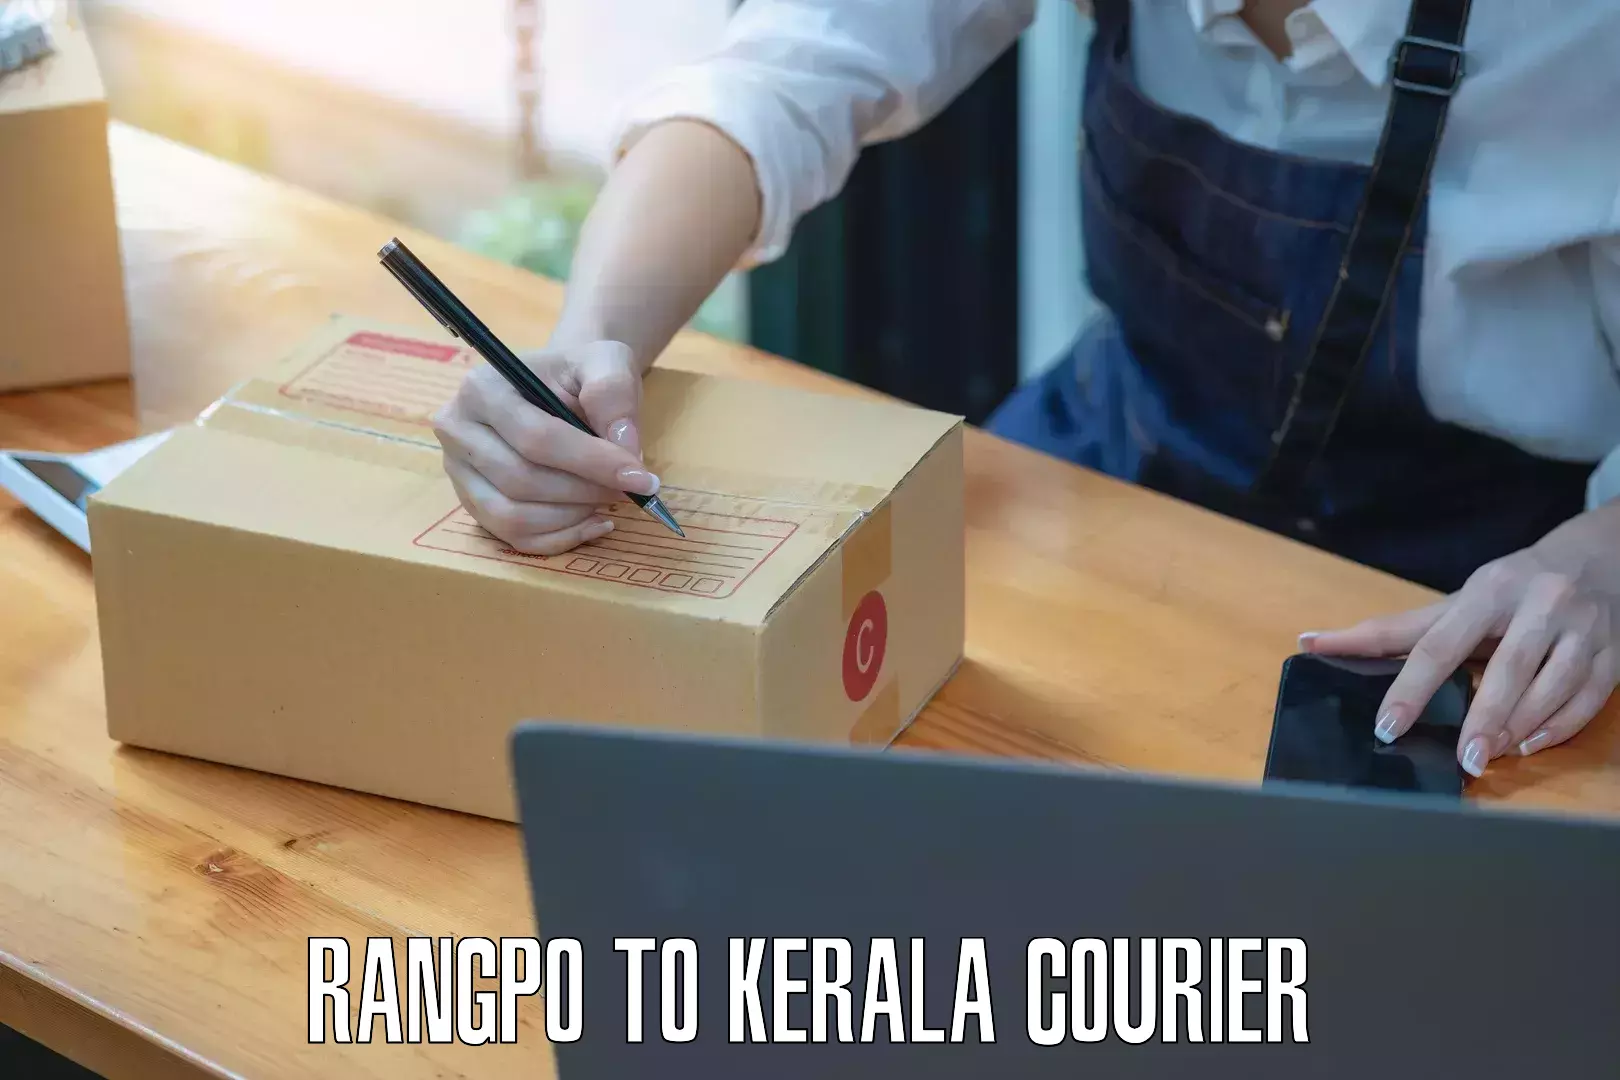 Courier service comparison Rangpo to Tirurangadi